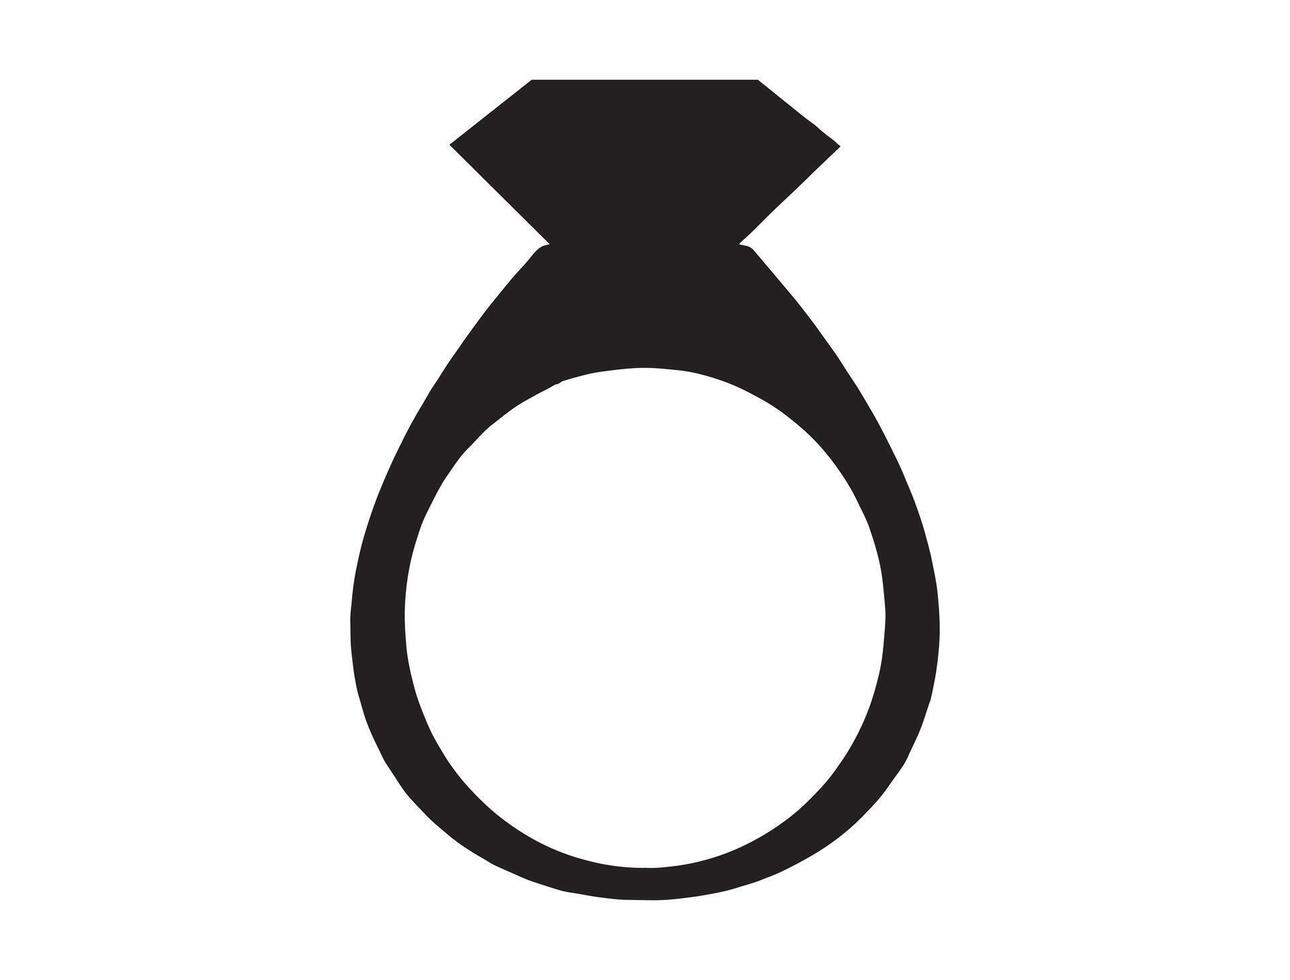 Diamond ring silhouette on white background vector